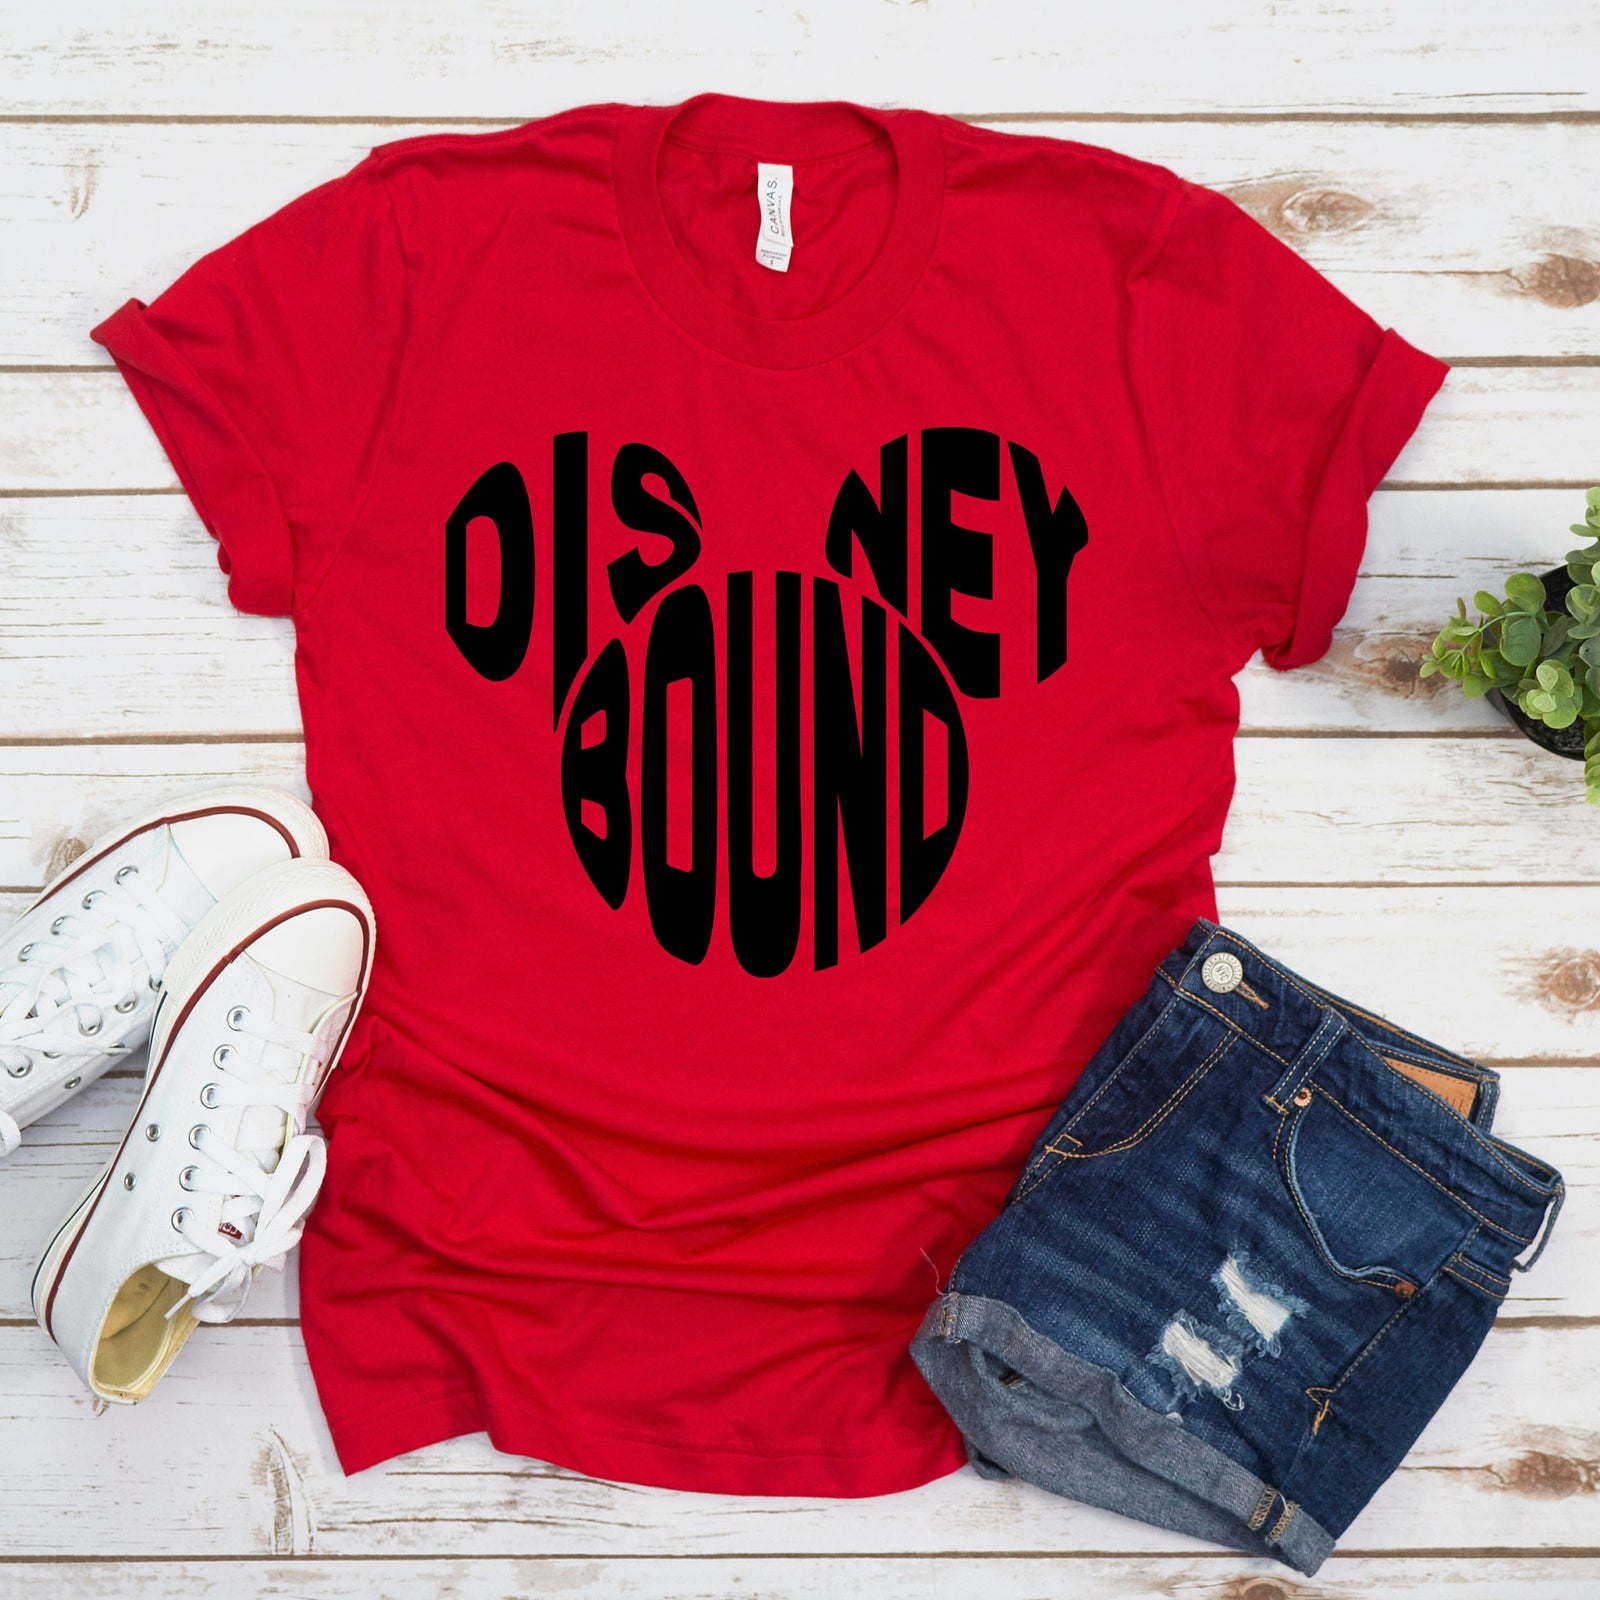 Disney Bound T Shirt - Mickey and Minnie t shirt - Headed to Disney - Disney Trip Matching Shirts